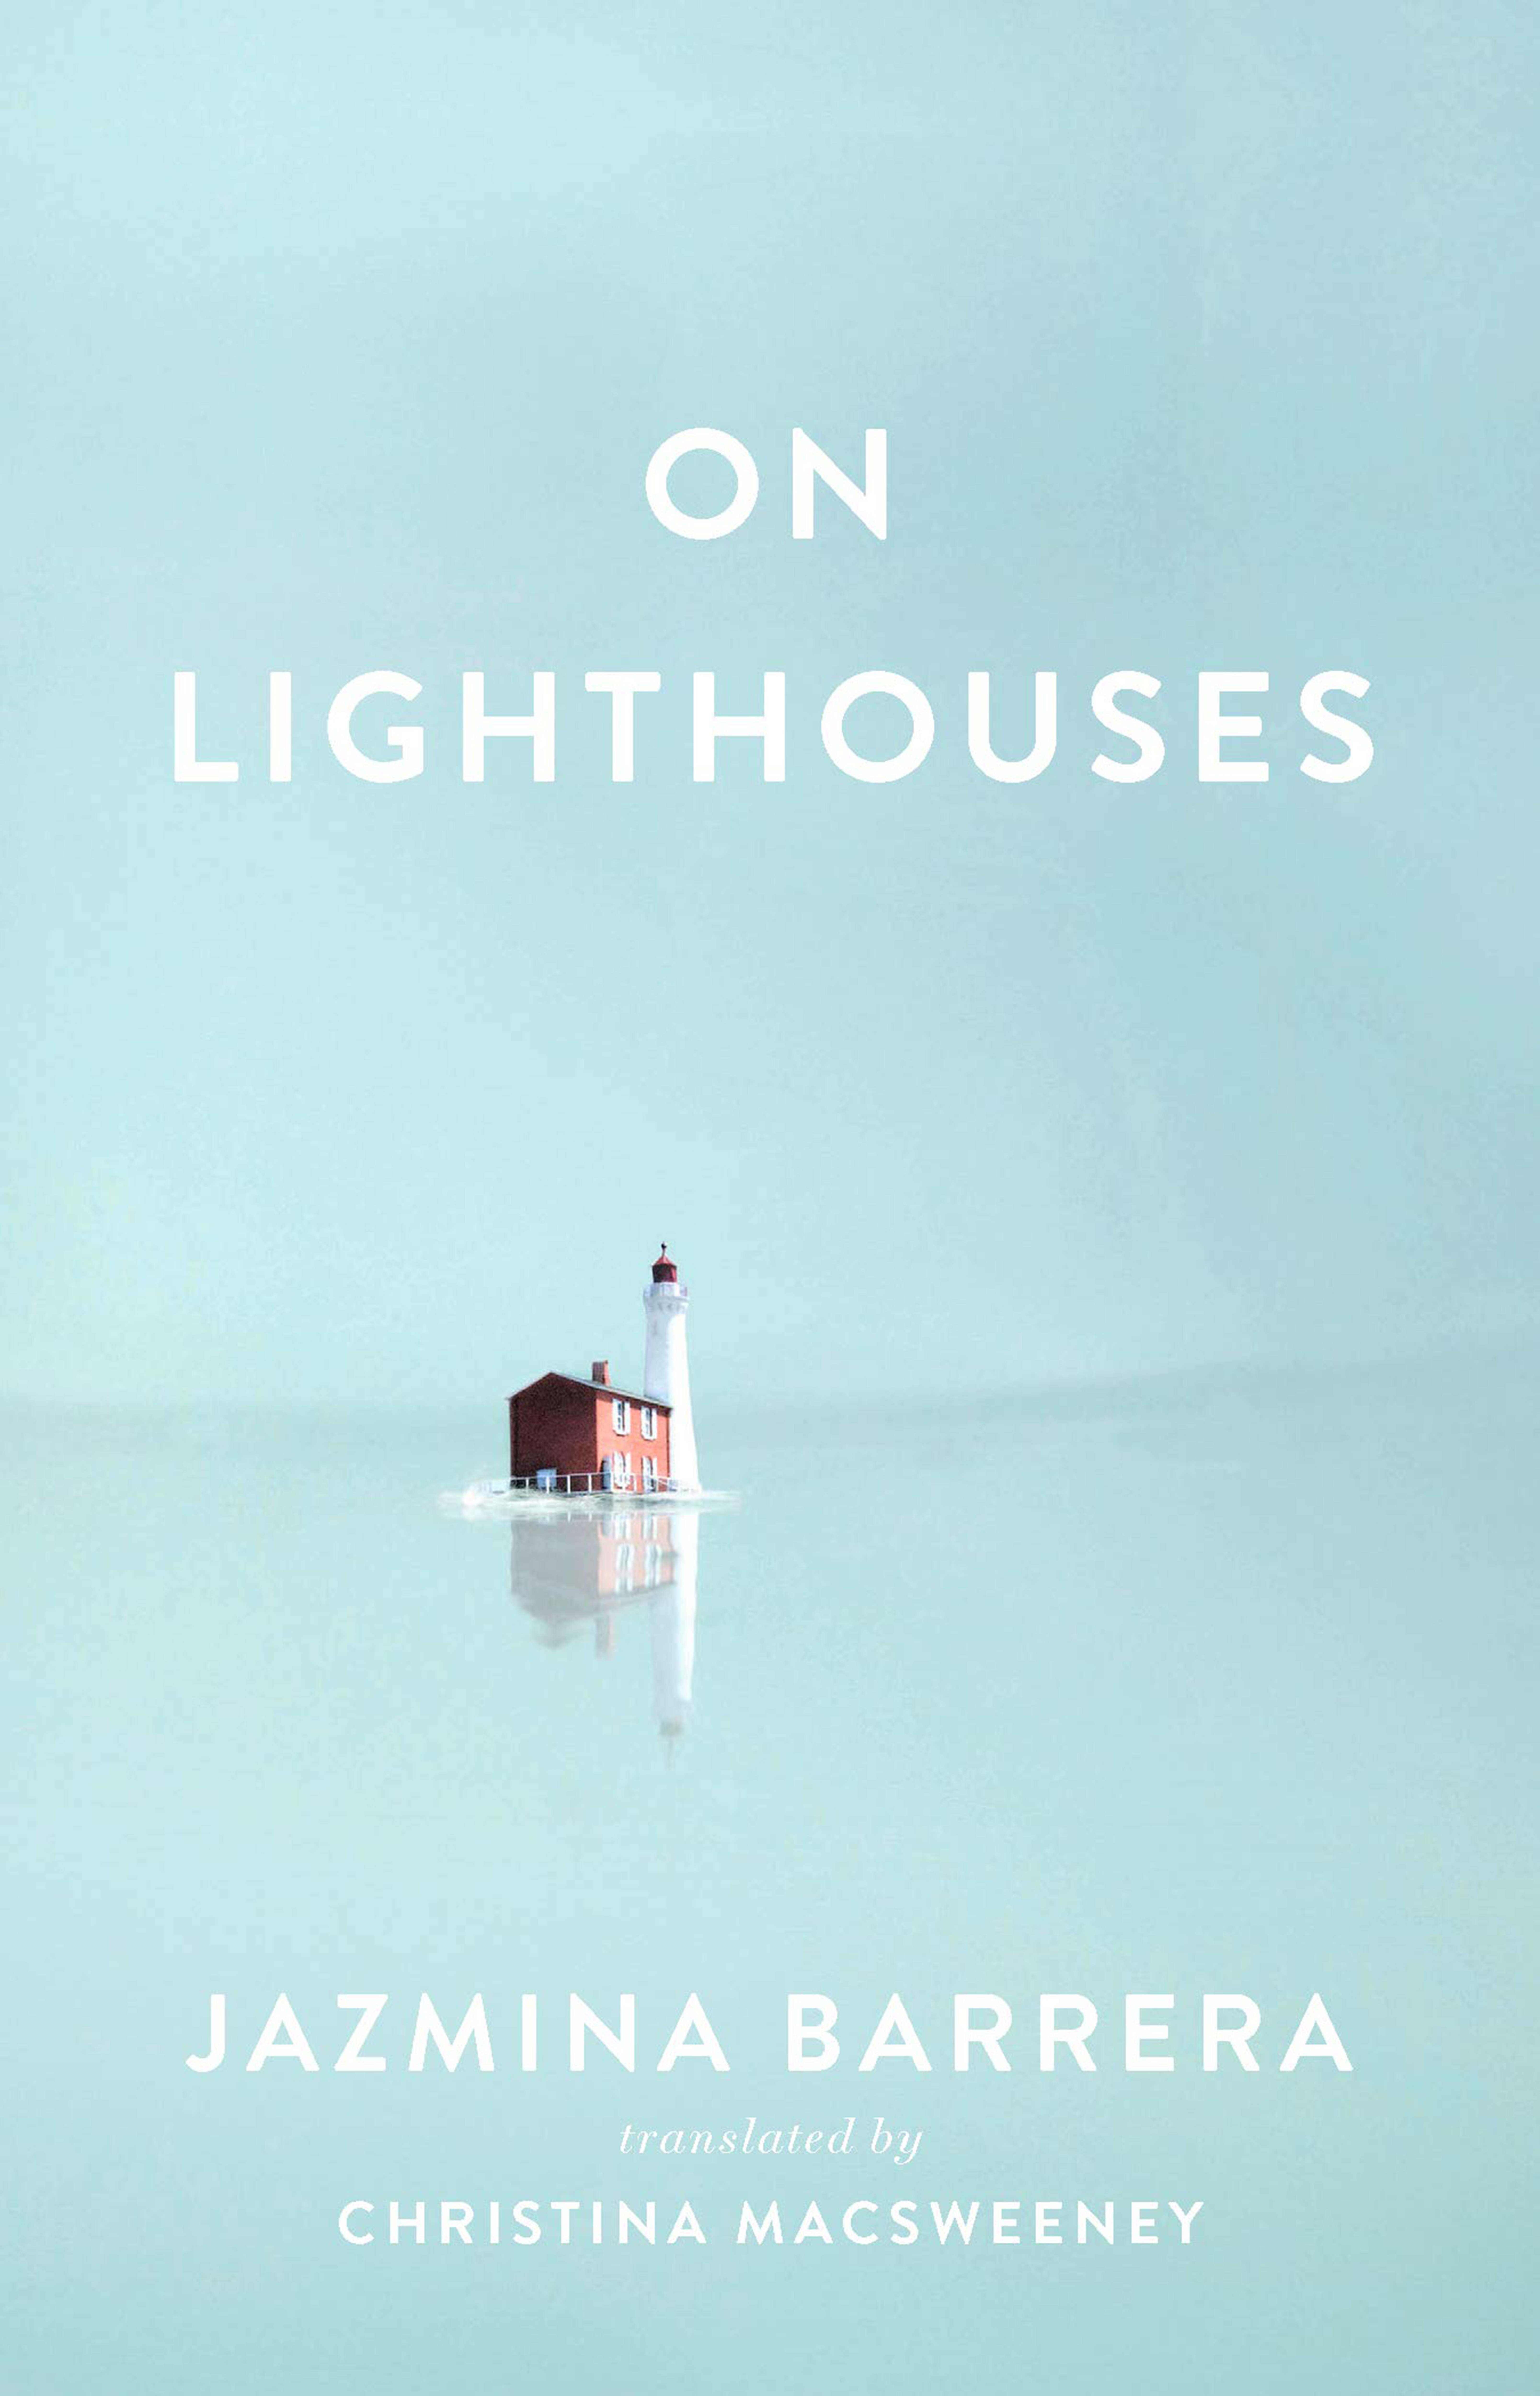 On Lighthouses by Jazmina Barrera. Photo: Handout